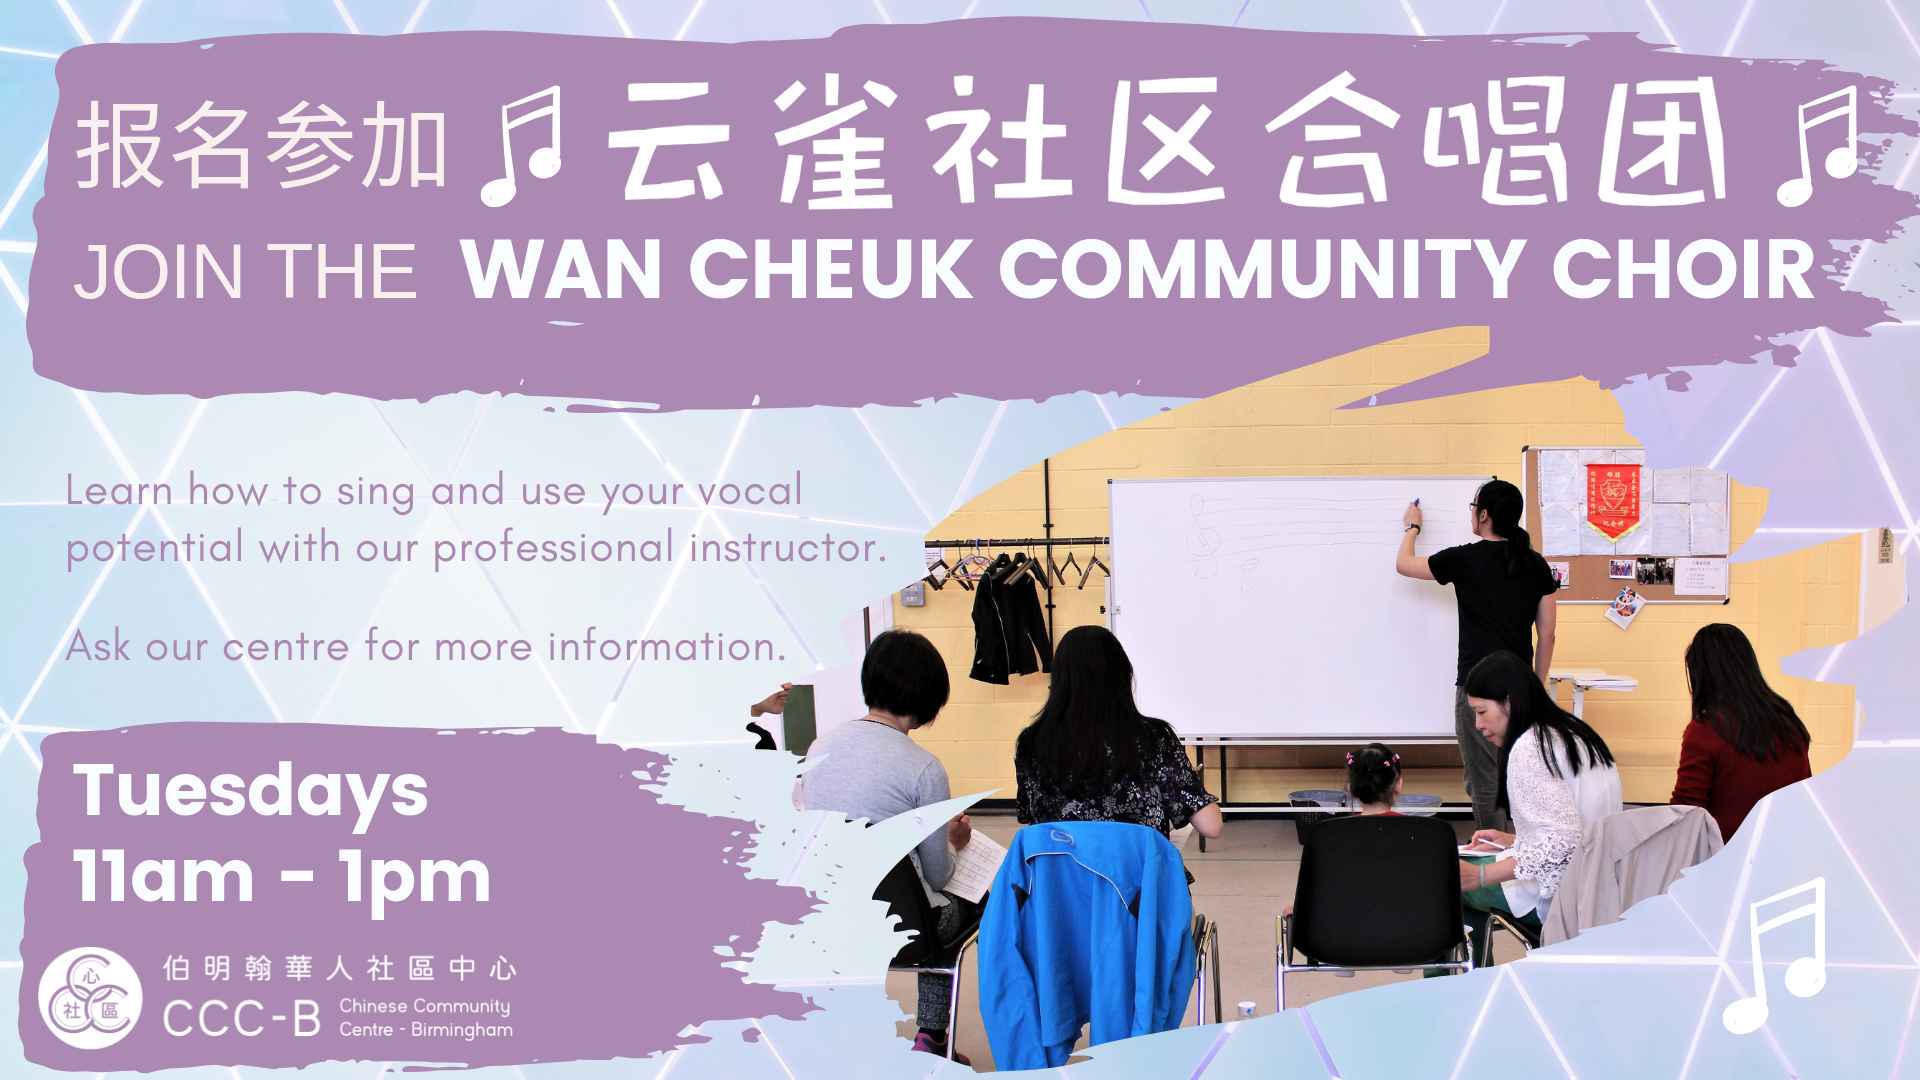 Wan Cheuk Community Choir 云雀合唱团